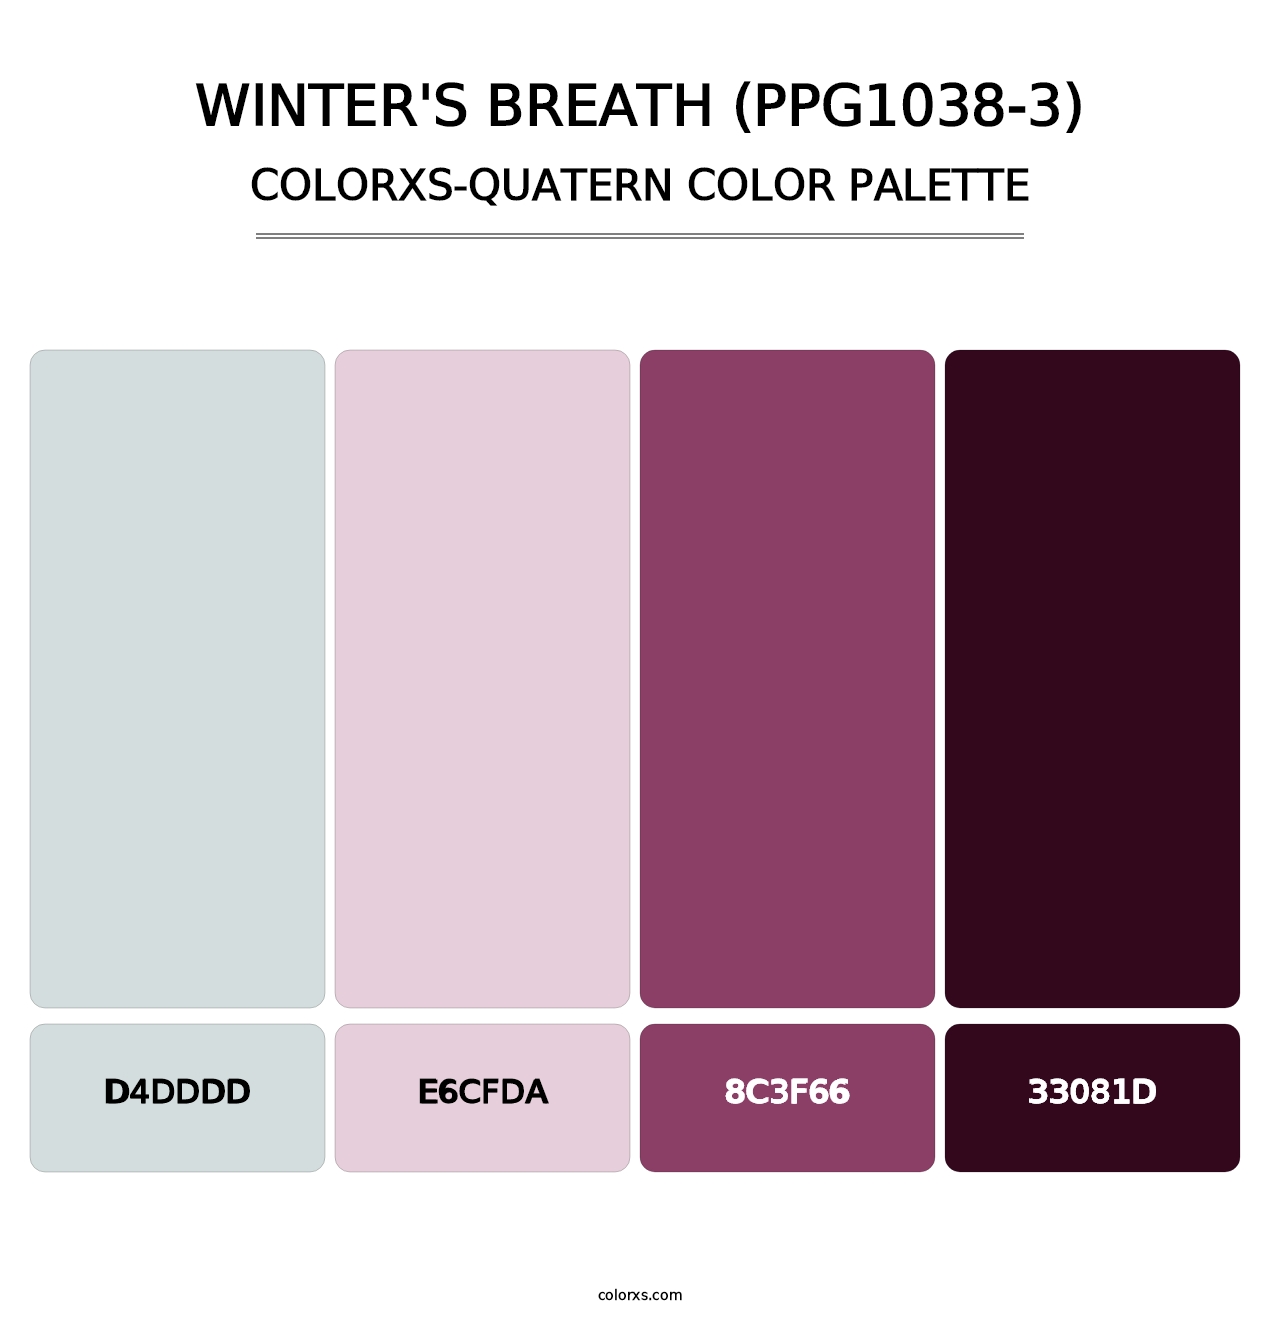 Winter's Breath (PPG1038-3) - Colorxs Quatern Palette